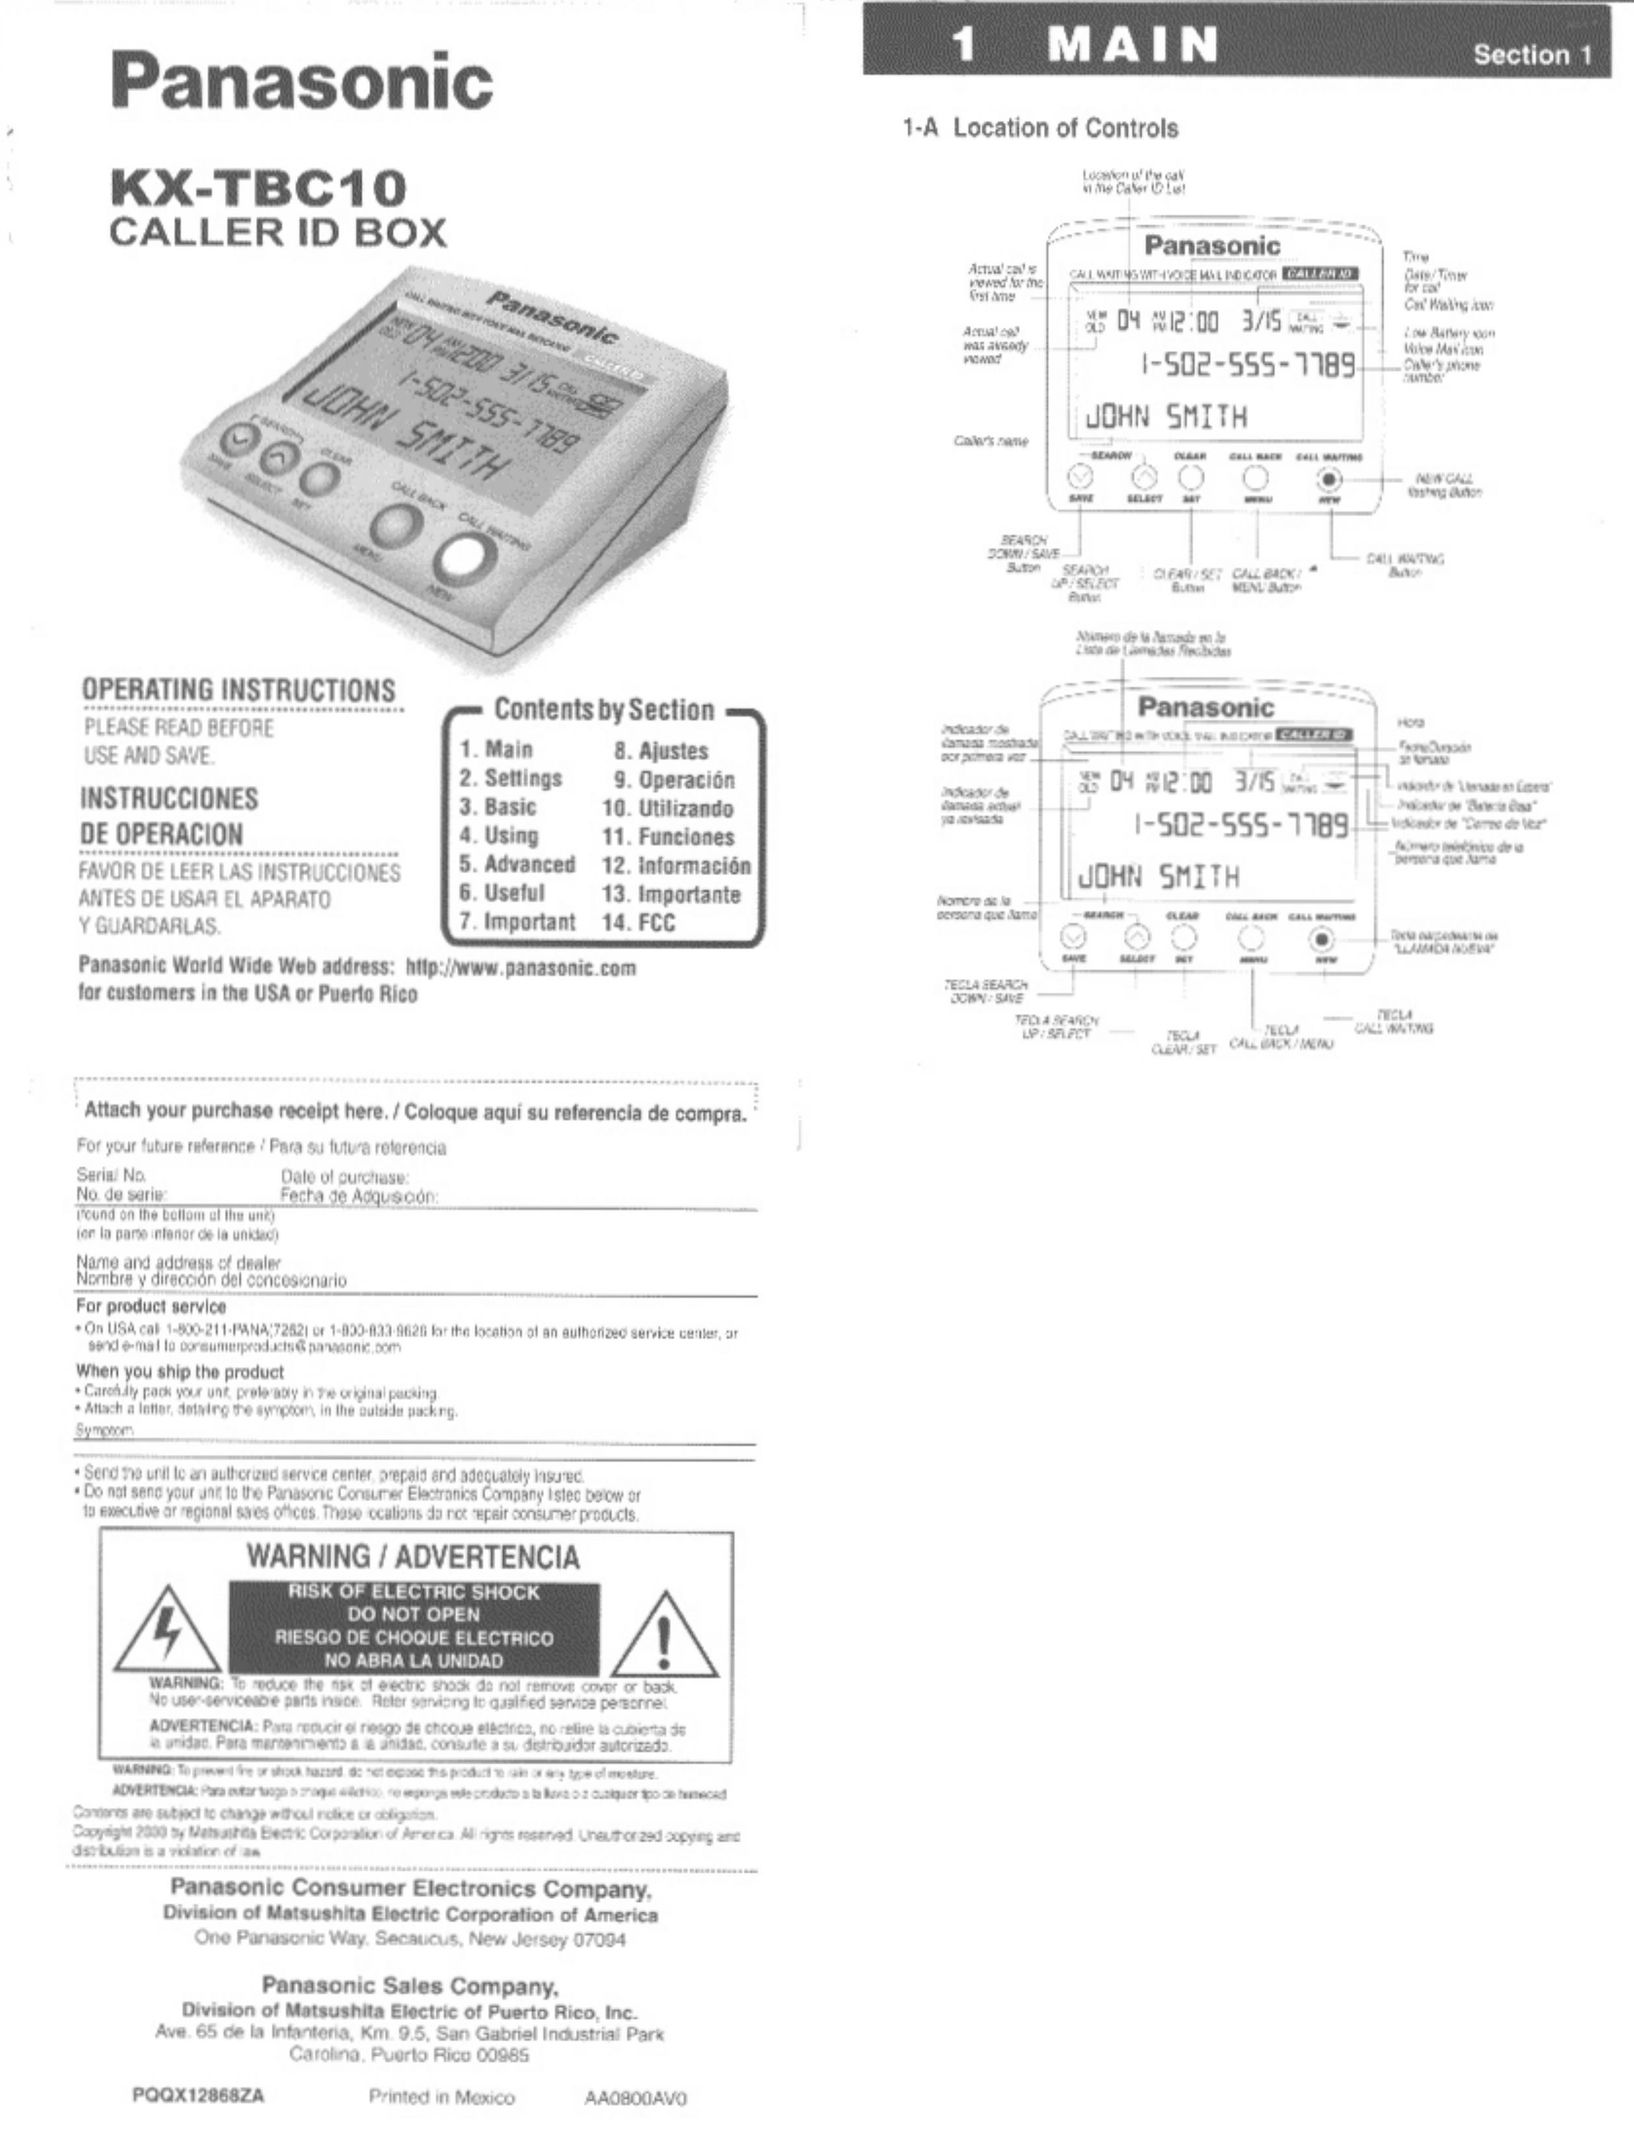 Panasonic KX-TBC10 Caller ID Box User Manual